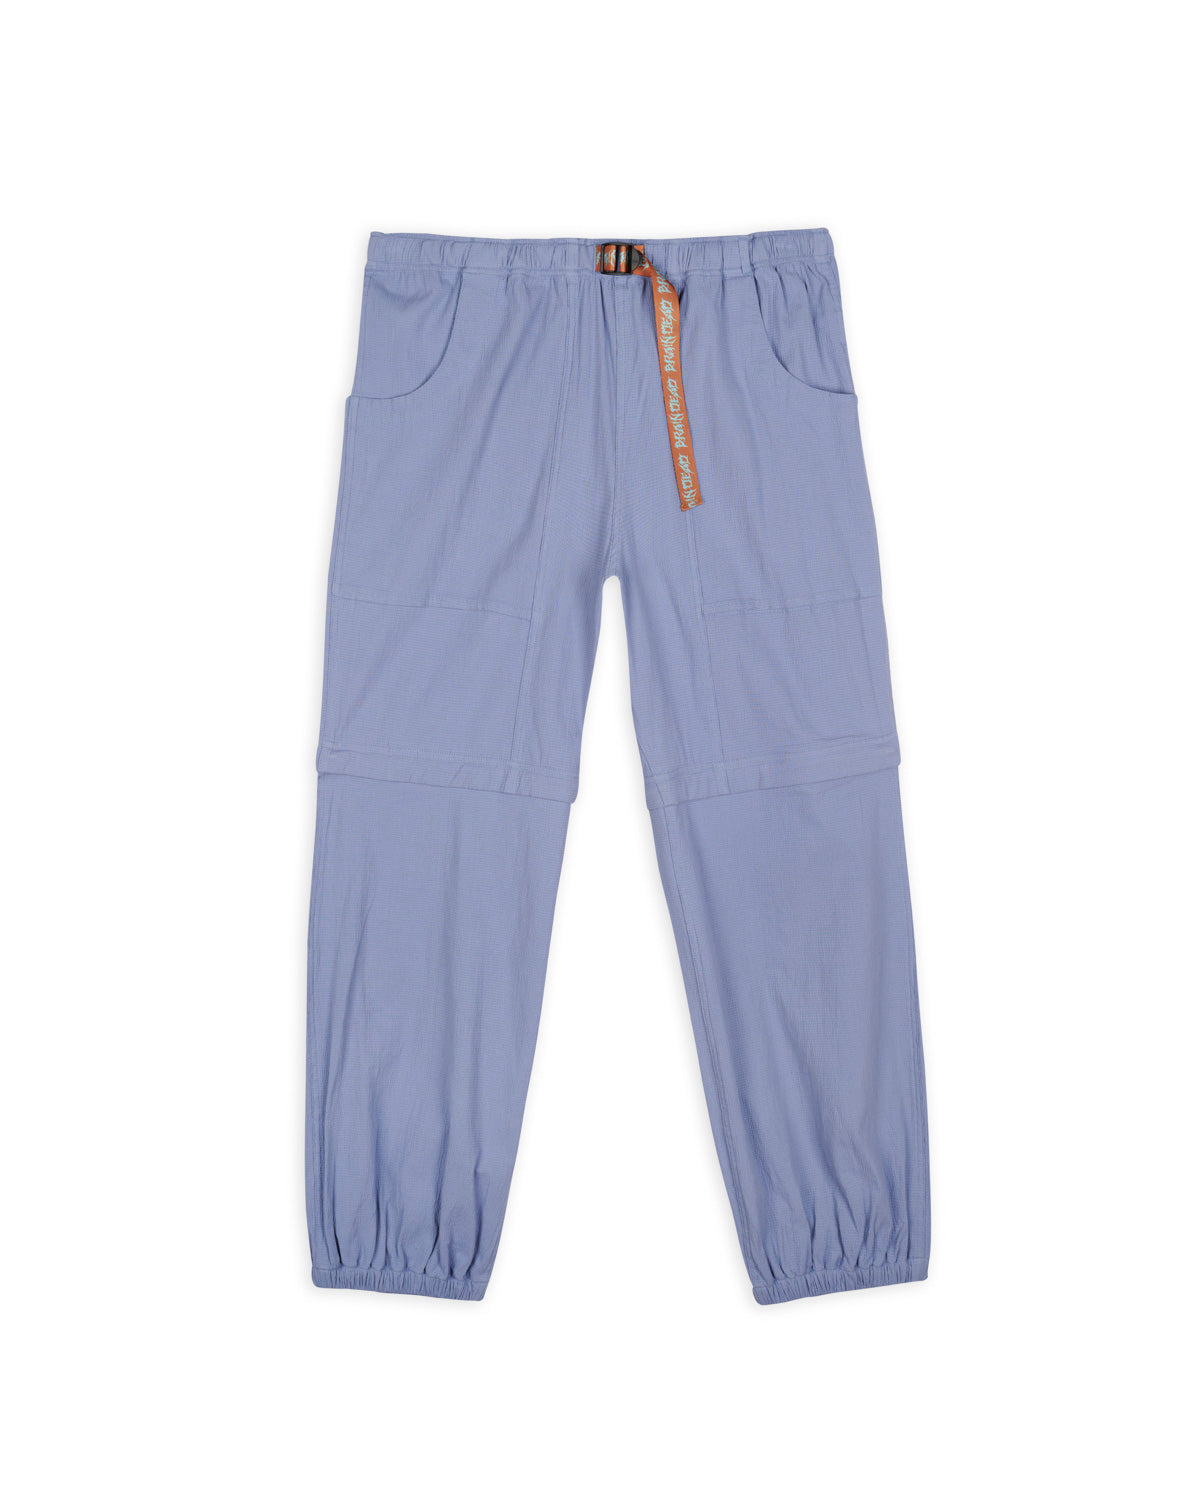 Alpinist Seersucker Convertible Pants, Slate Blue